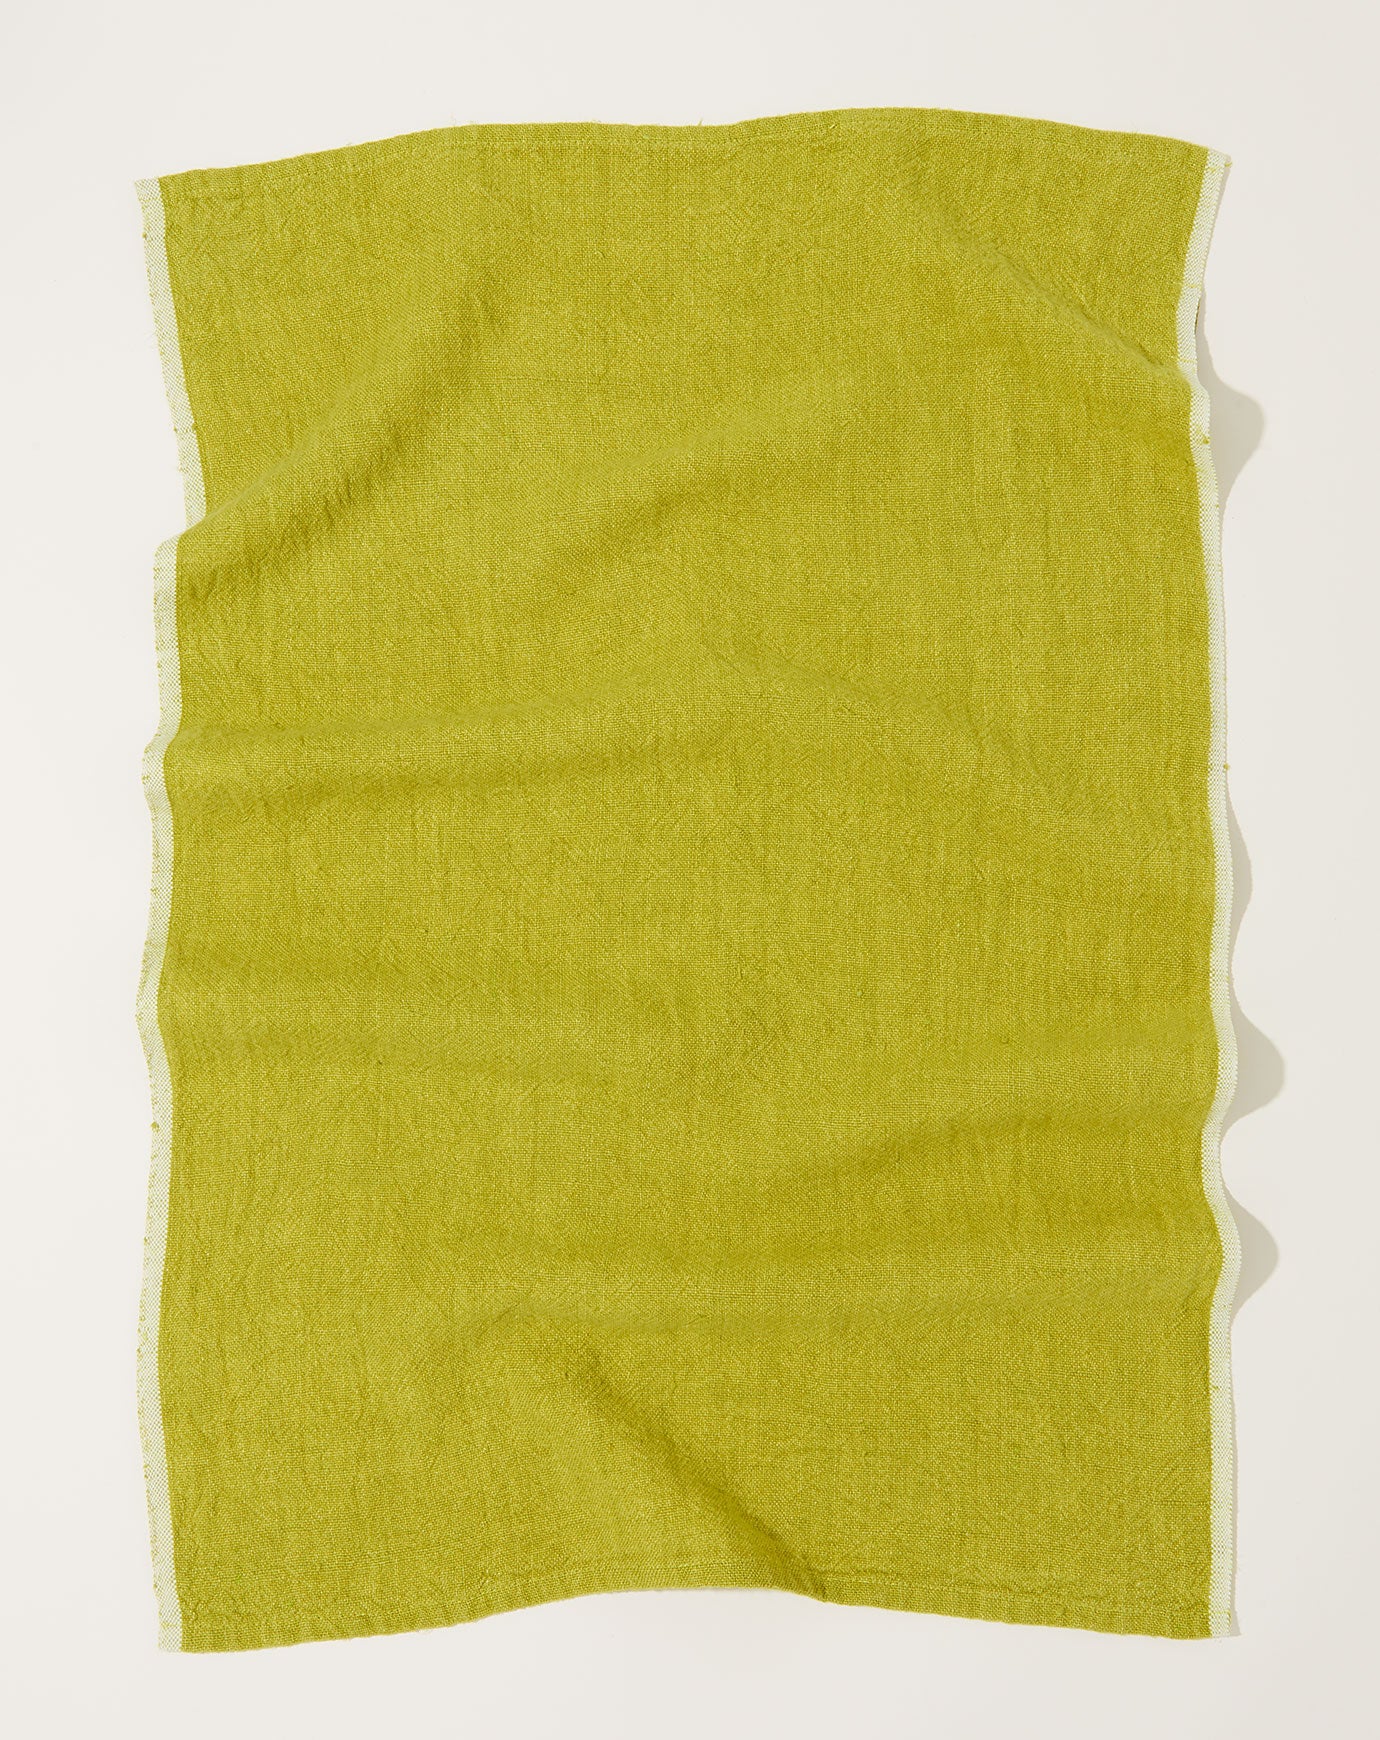 Caravan Chunky Linen Towels in Lime, Set of 2